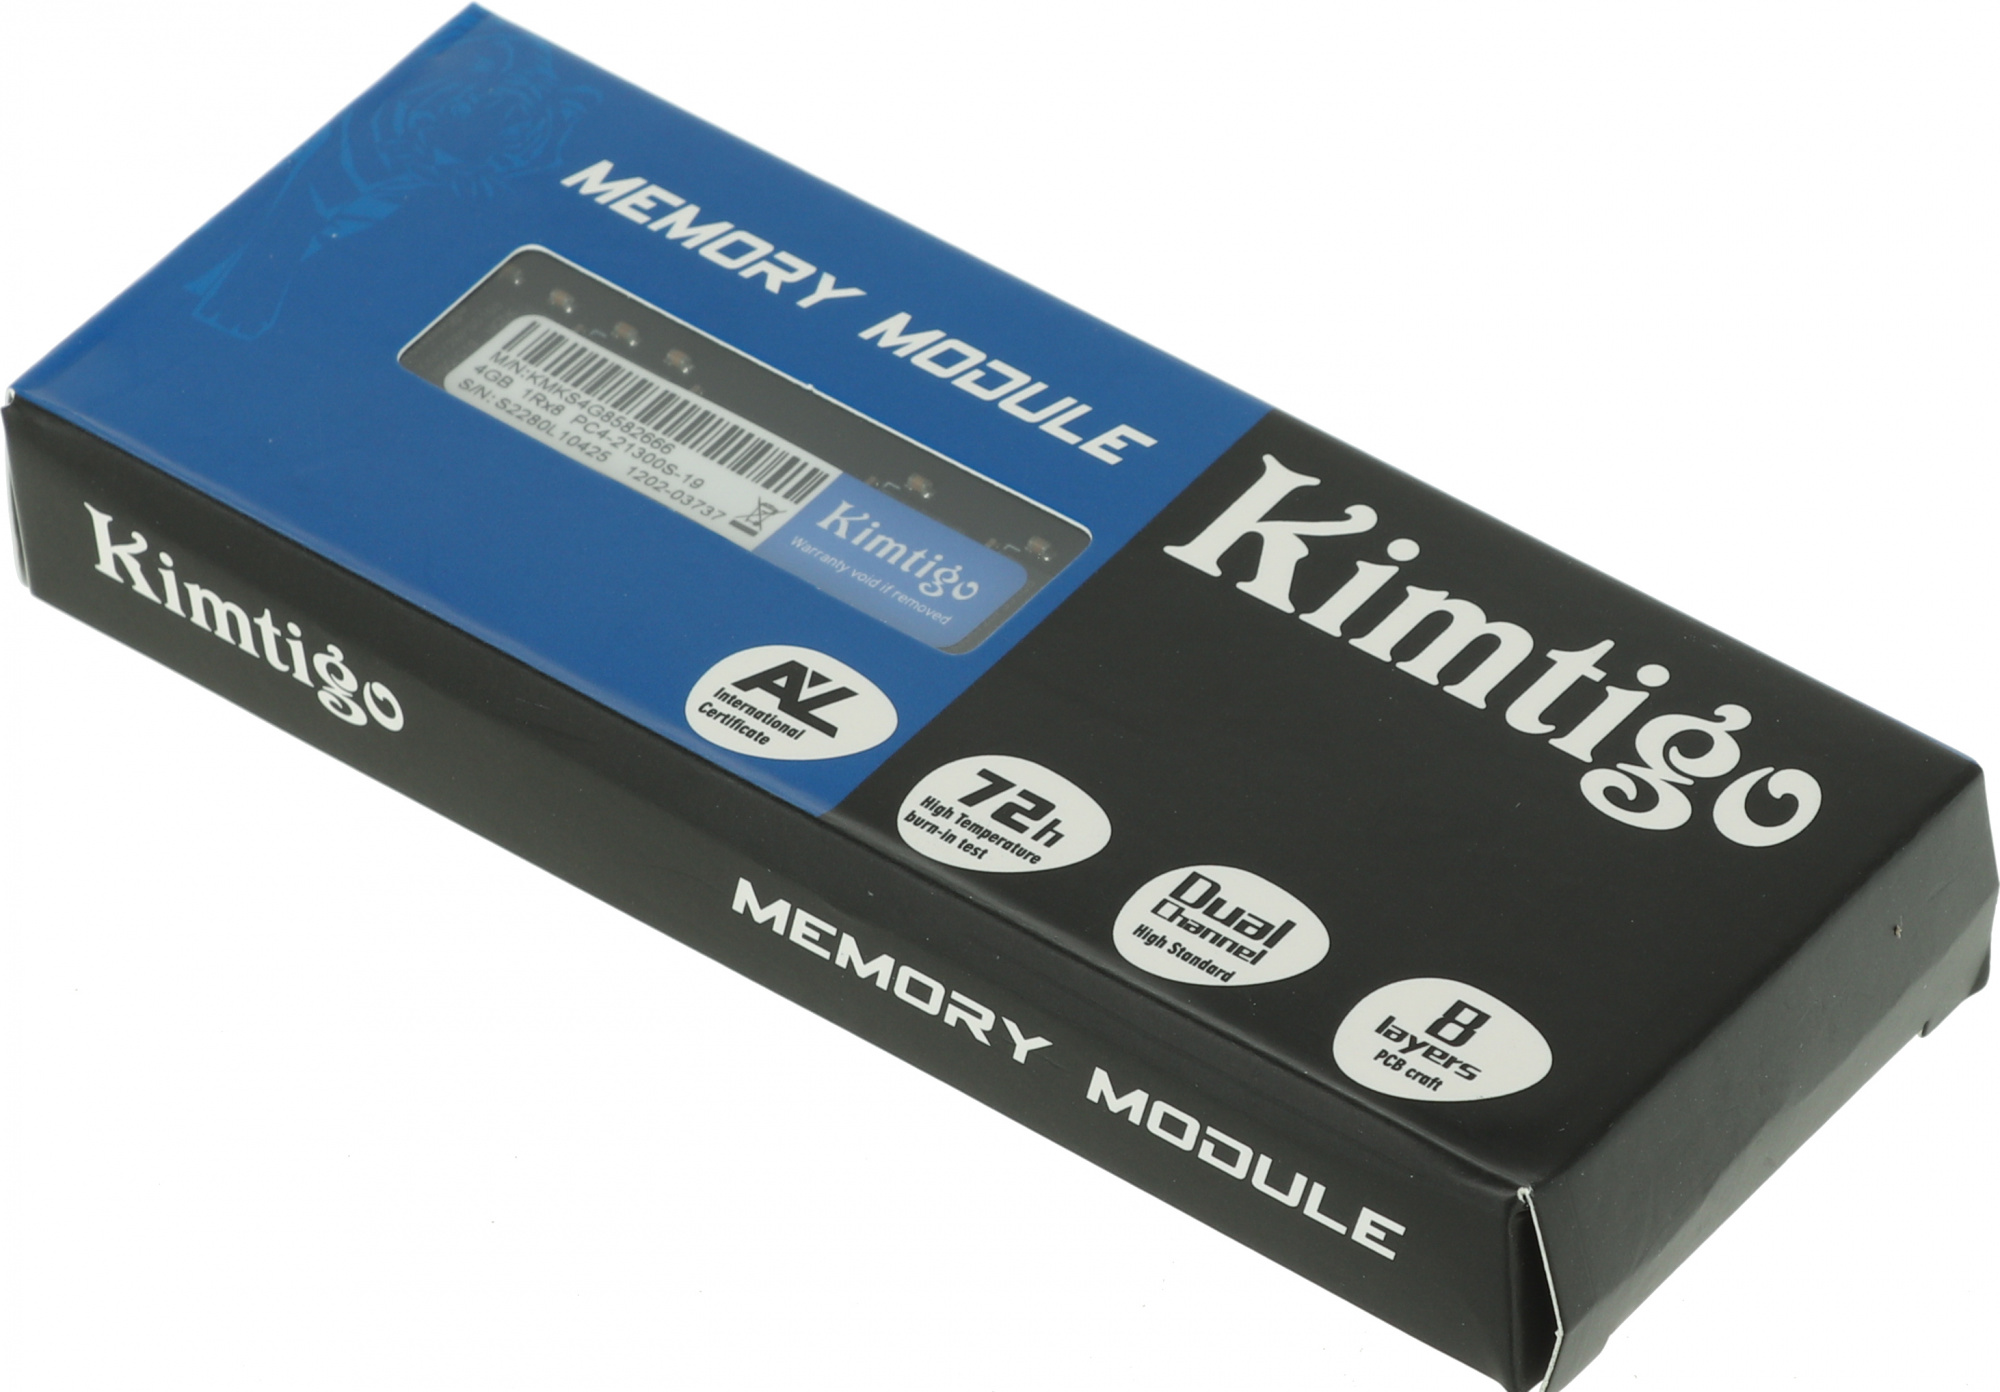 Память KIMTIGO DDR4 4Gb 2666MHz PC4-21300 (KMKS4G8582666)